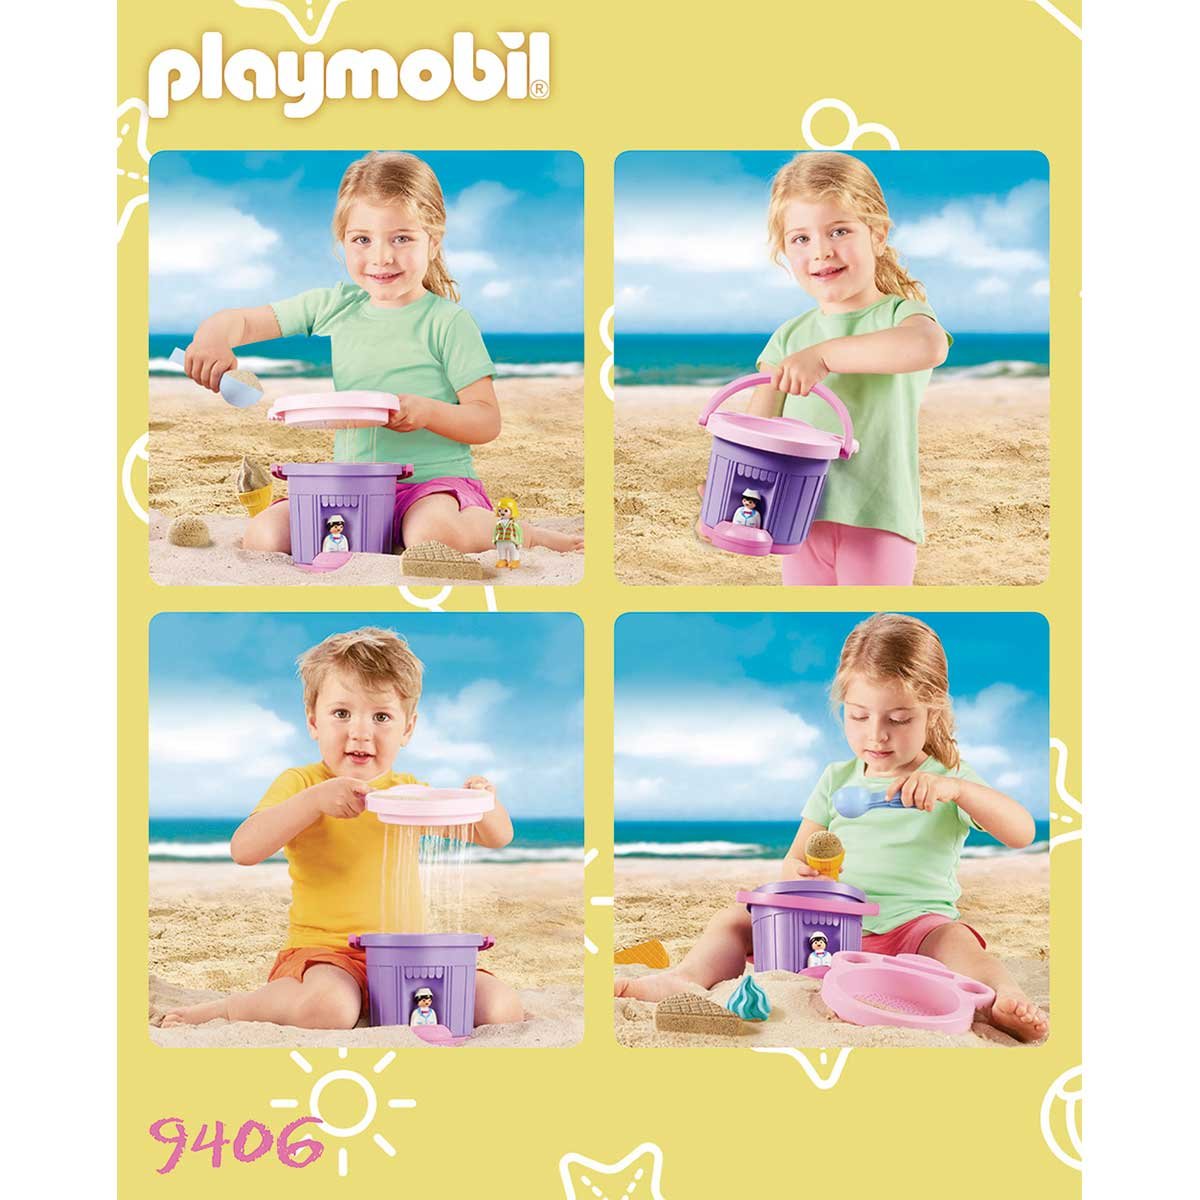 Heladería Playmobil